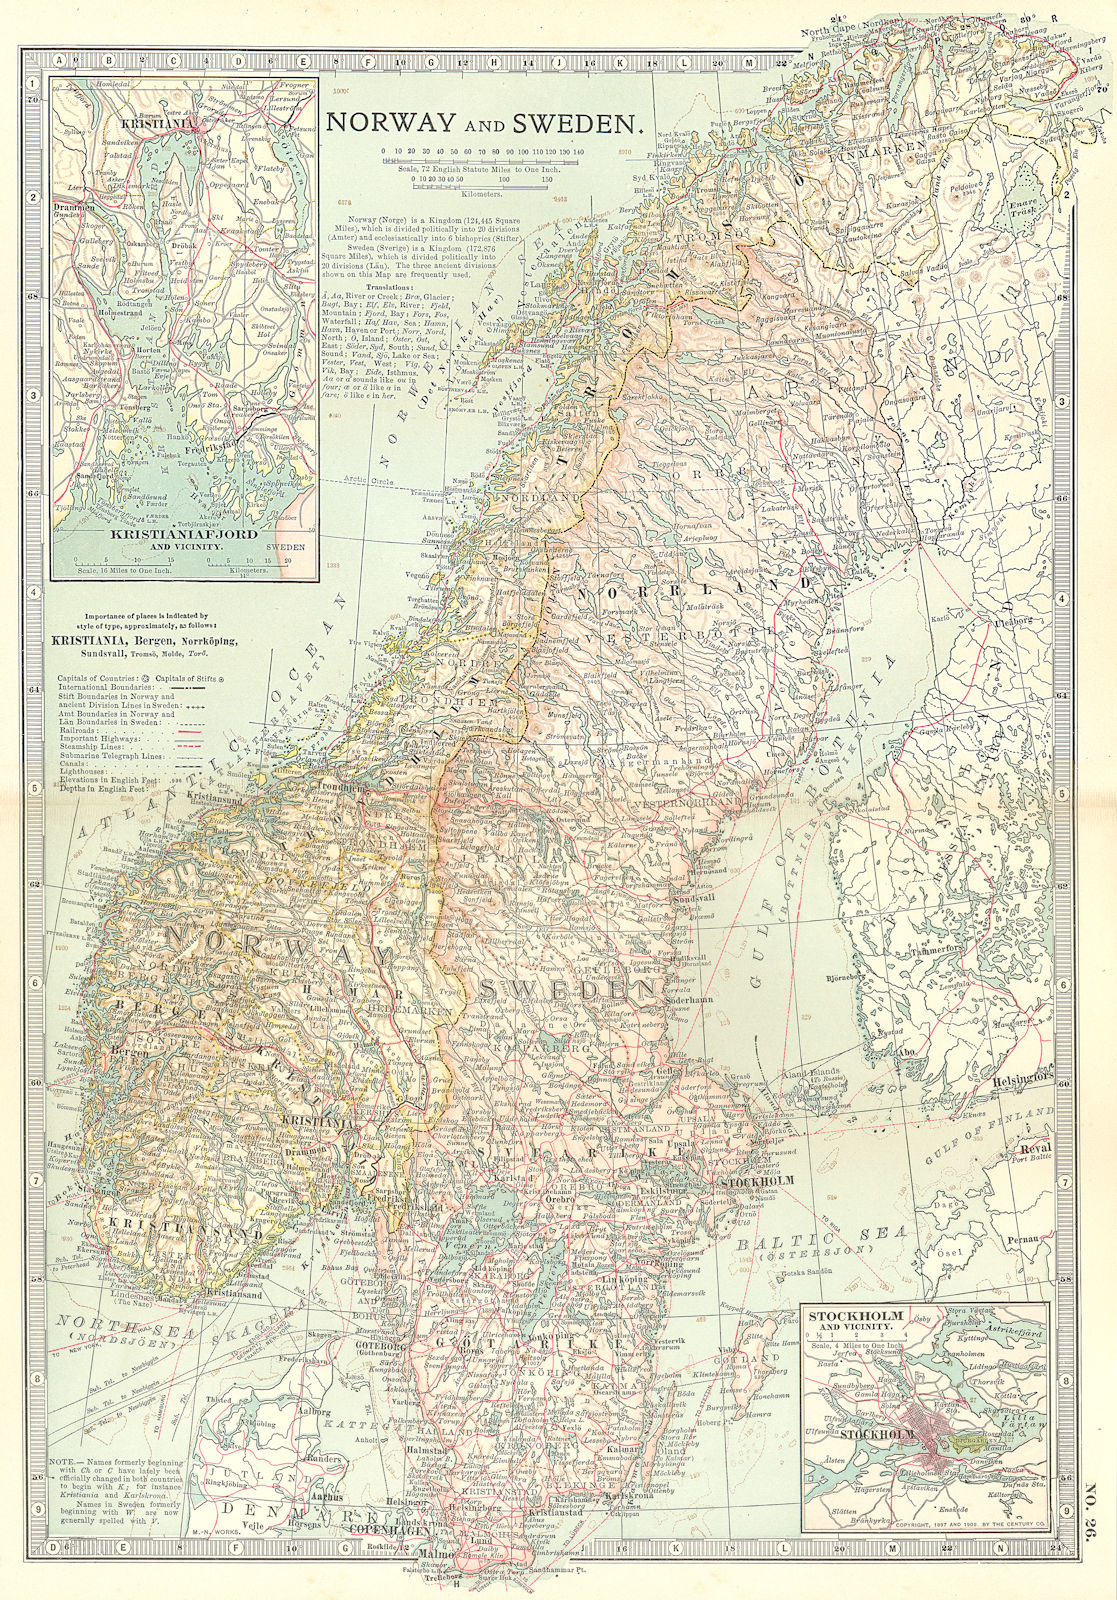 SCANDINAVIA. Norway, Sweden; Inset Oslo, Stockholm; Kristianiafjord 1903 map